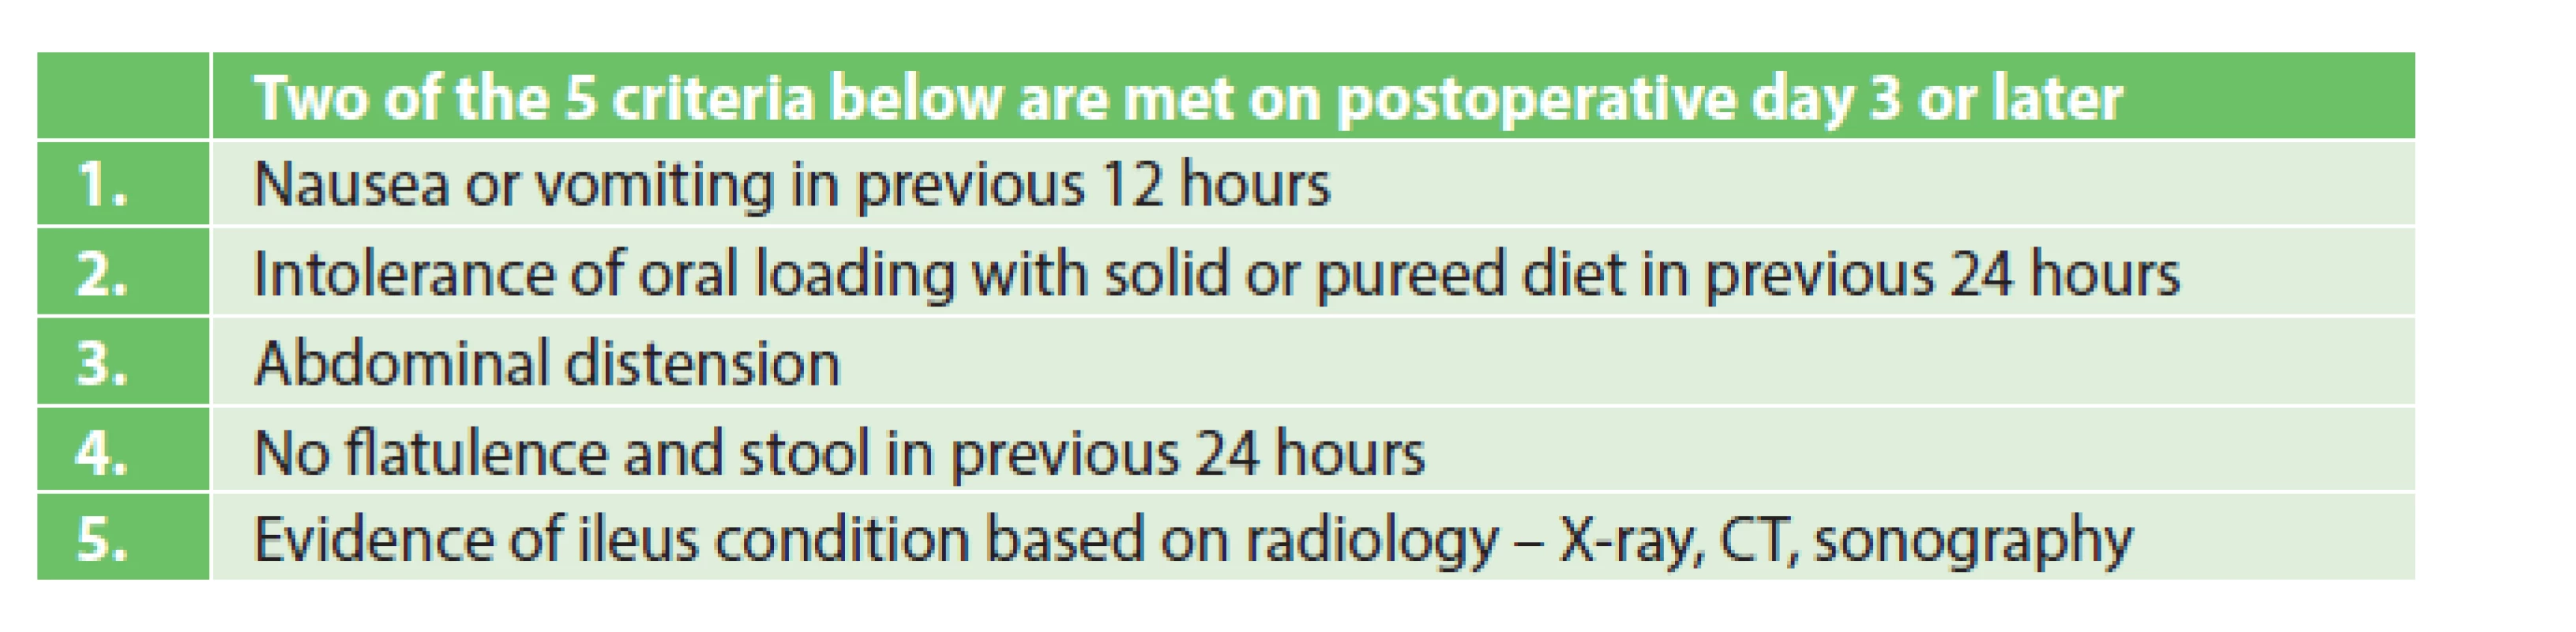 Diagnostic criteria for postoperative ileus